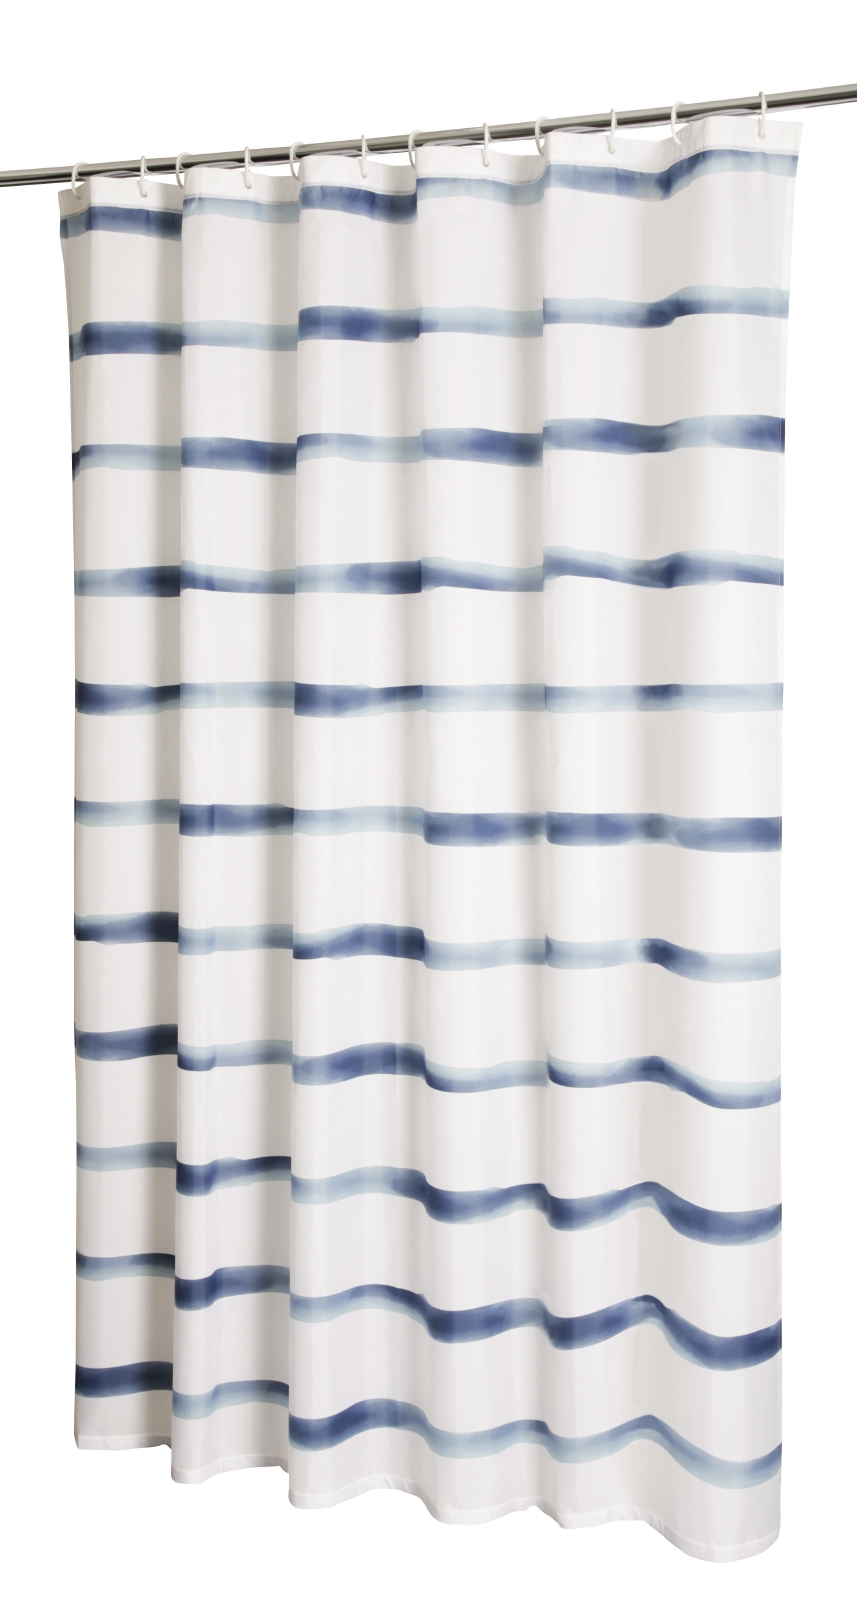 'aquaSu® Textil-Duschvorhang Windsee in maritimer Optik, 180 x 200 cm